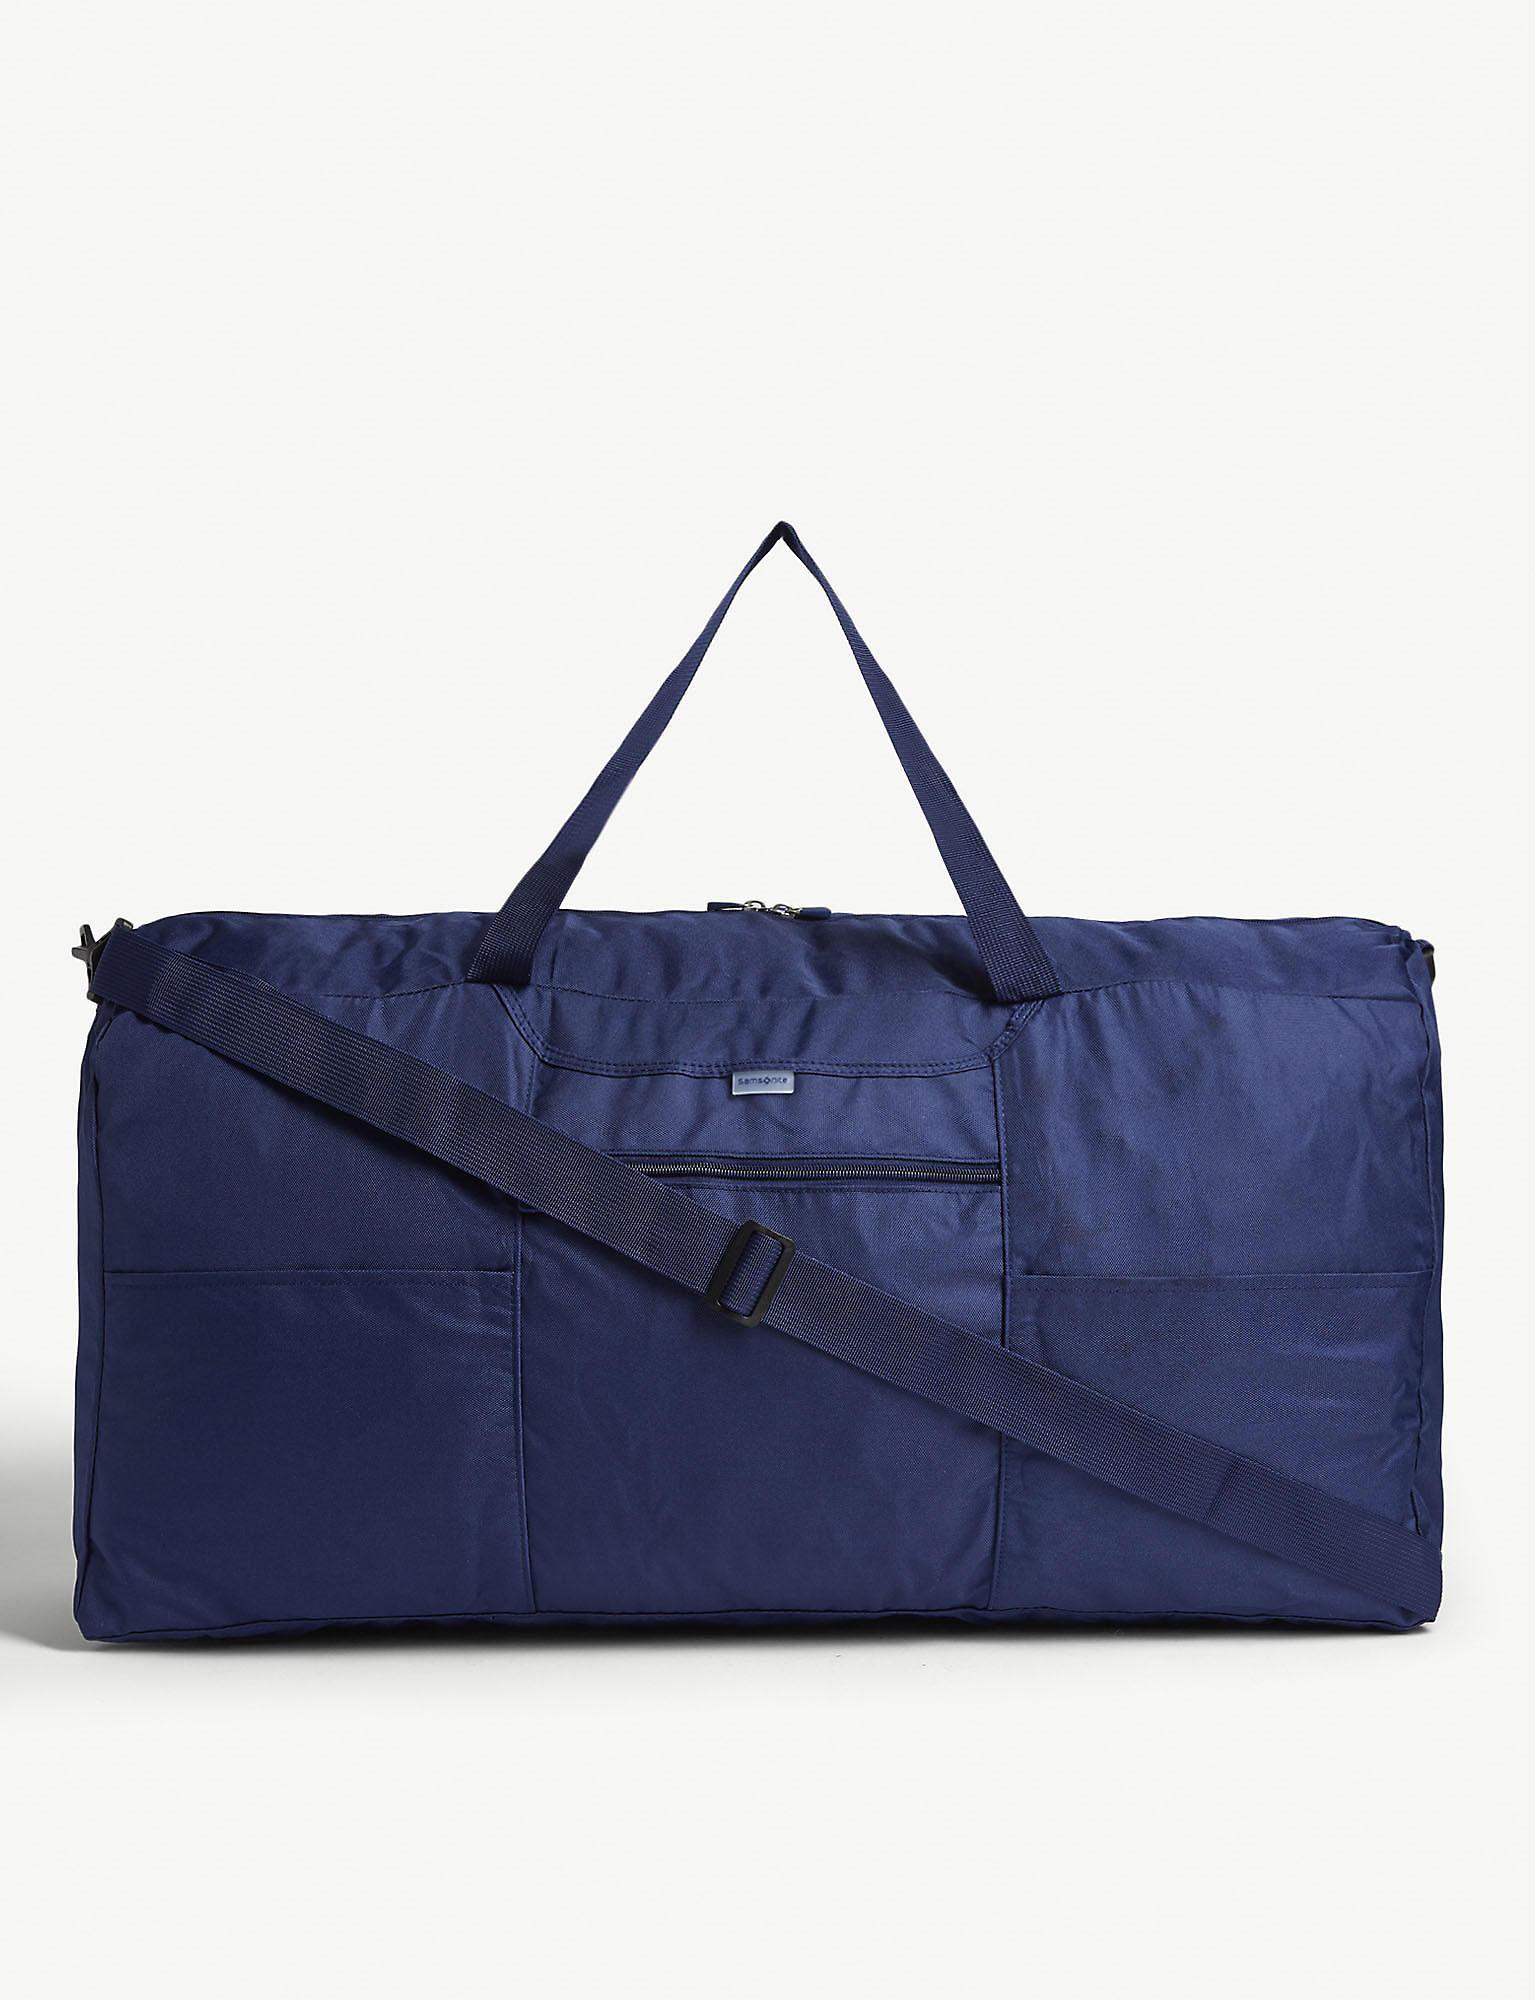 Samsonite Xl Foldable Duffle Bag in Blue | Lyst